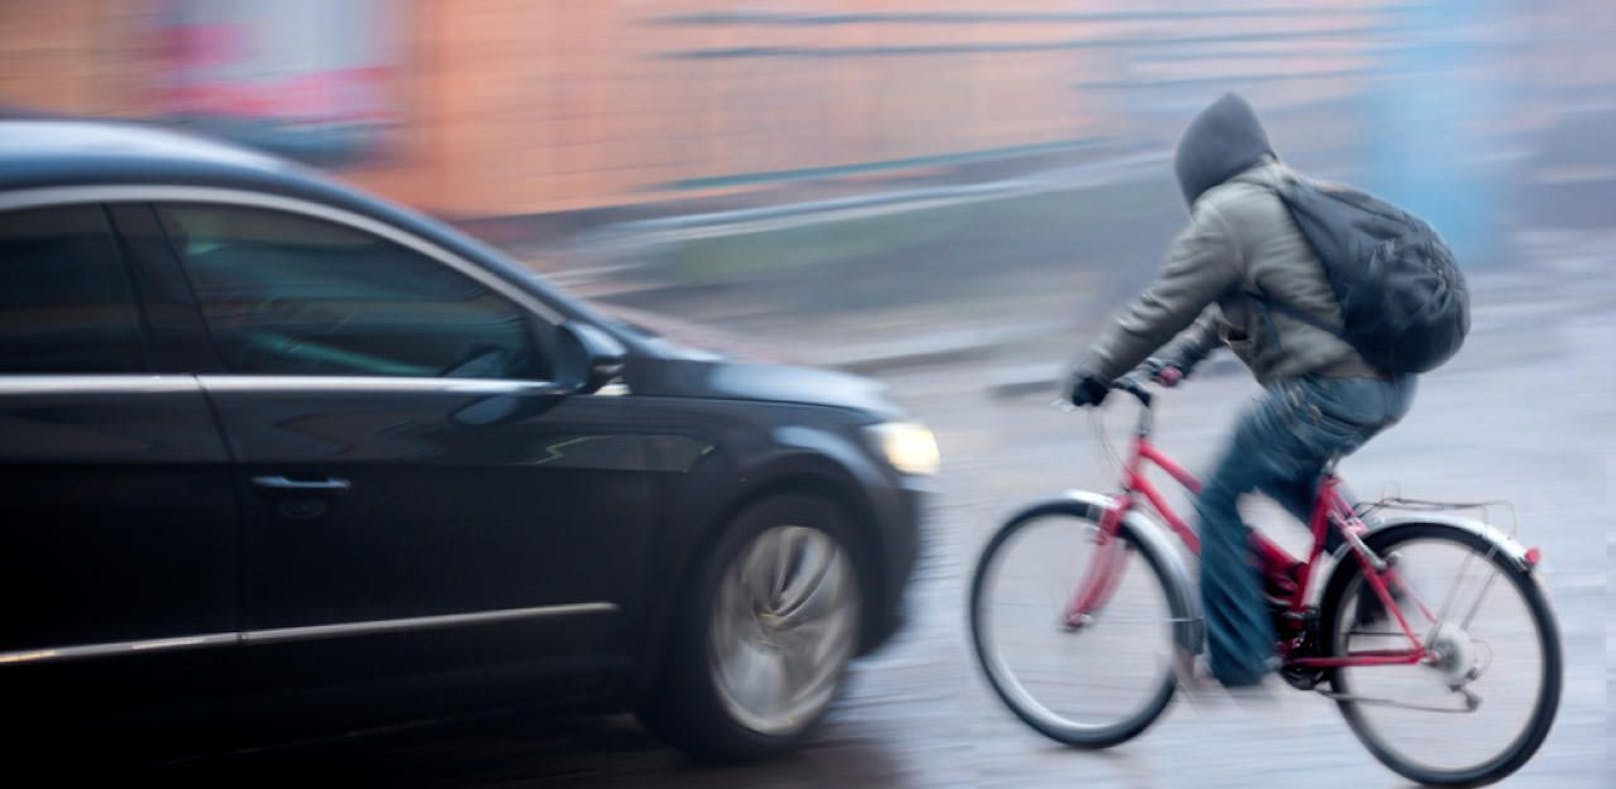 "Radfahrer sind größte Verkehrs-Gefahr"